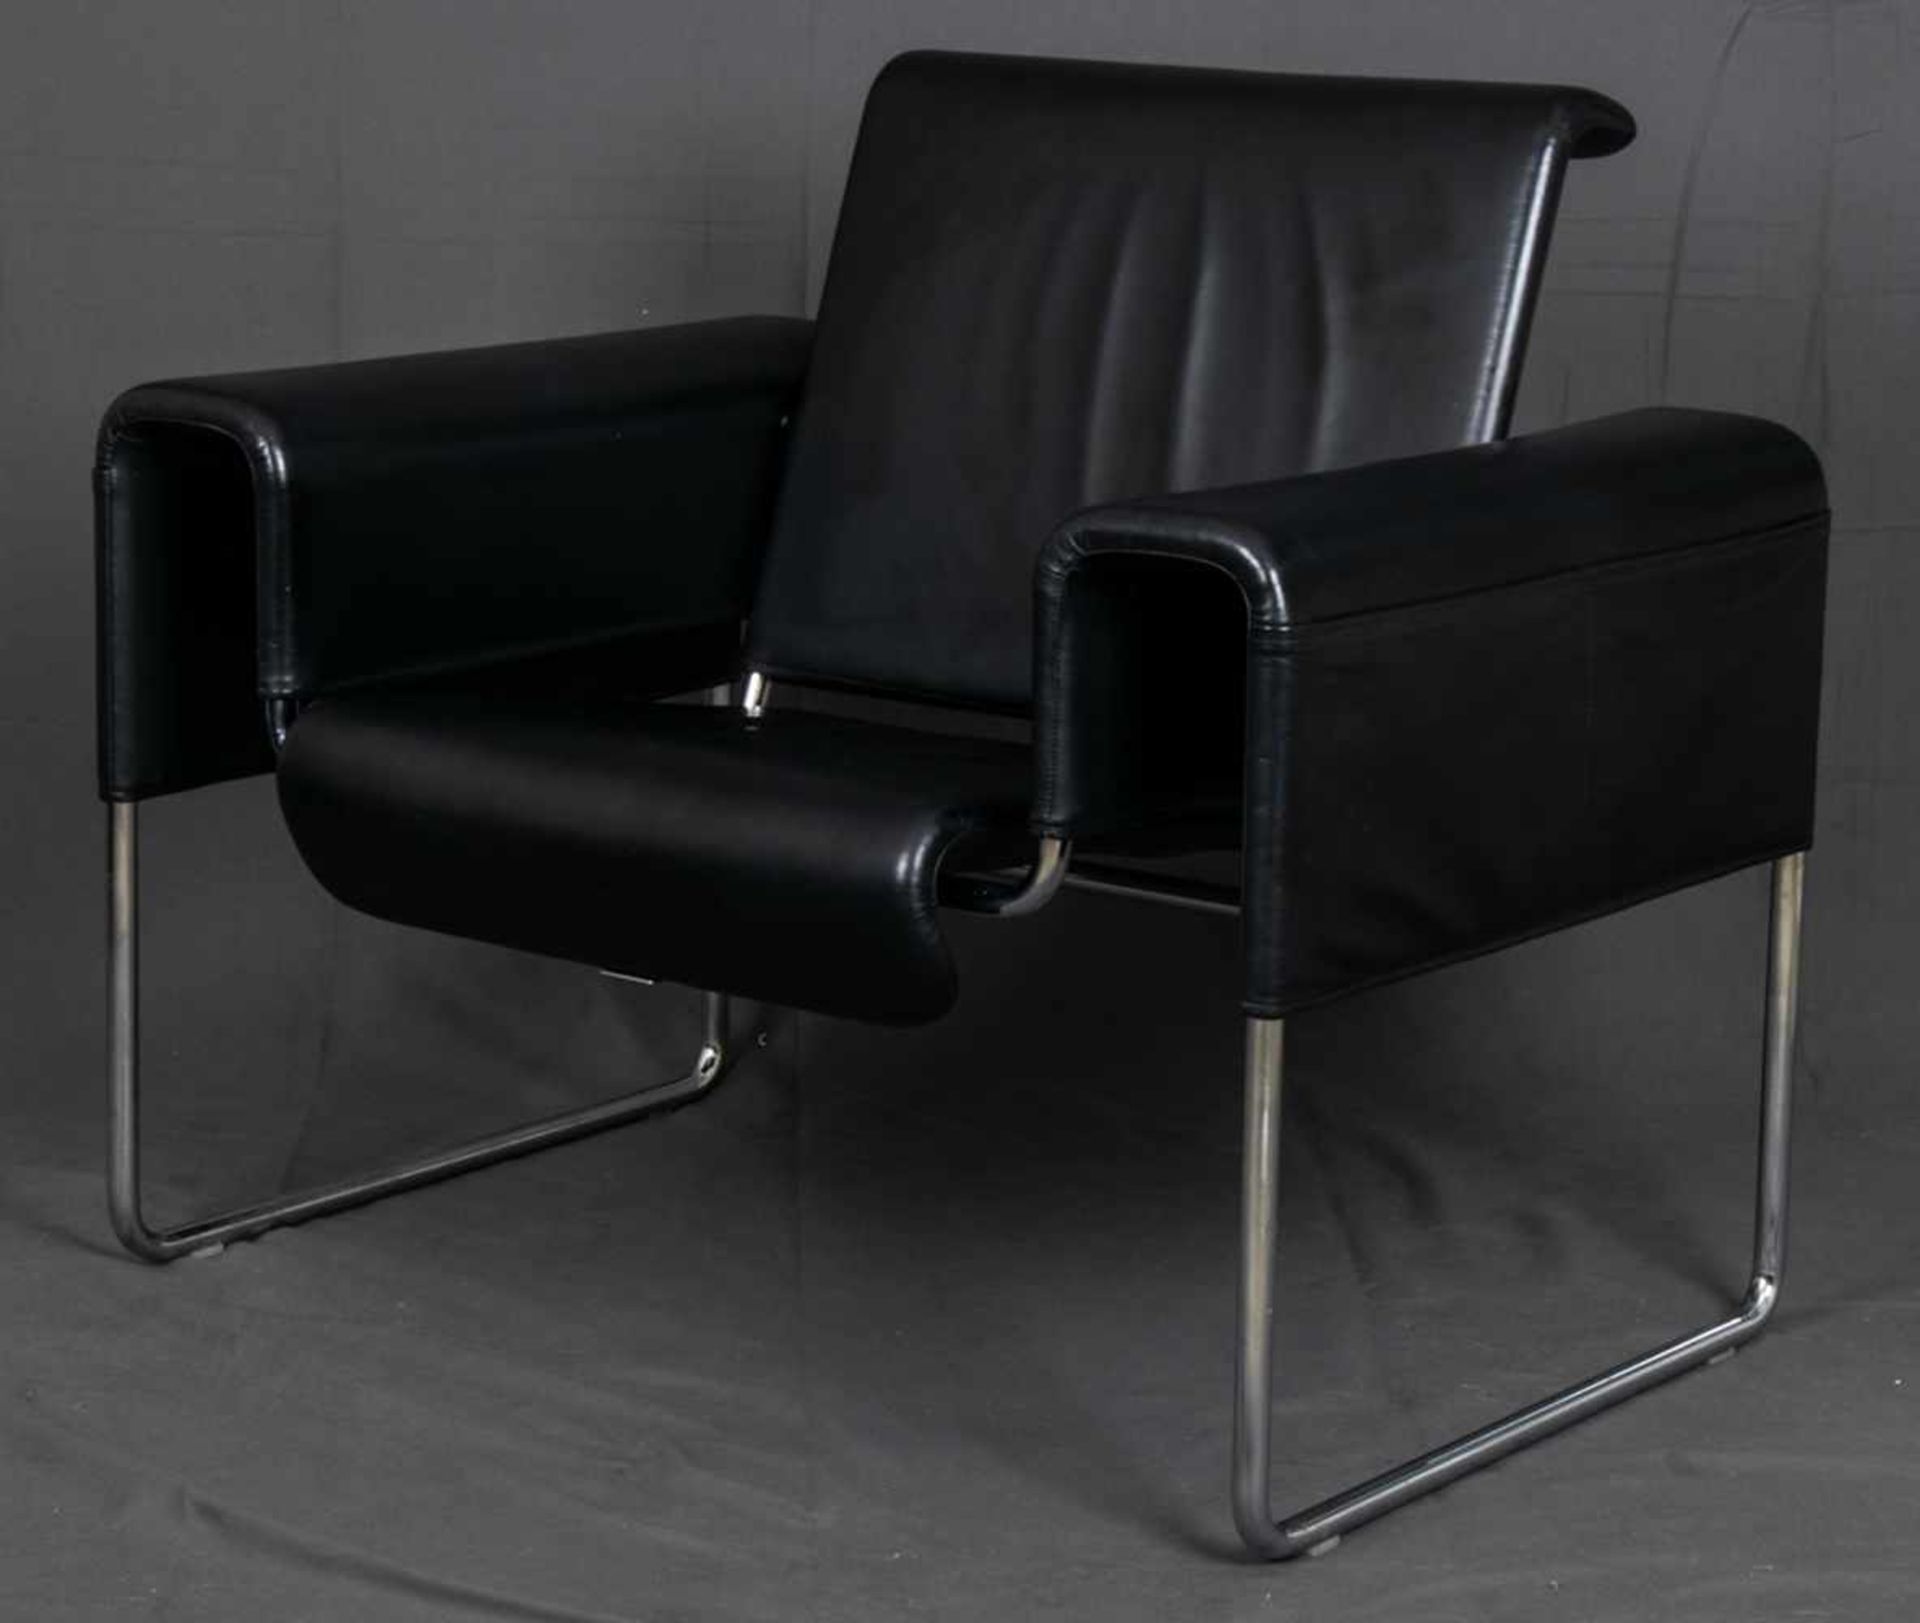 Lounge-Sessel "MOOD"-Design Studio 7.5, 2006. L & C ARNOLD, Stendal. Stahlrohrsessel mit schwarzer - Bild 3 aus 7